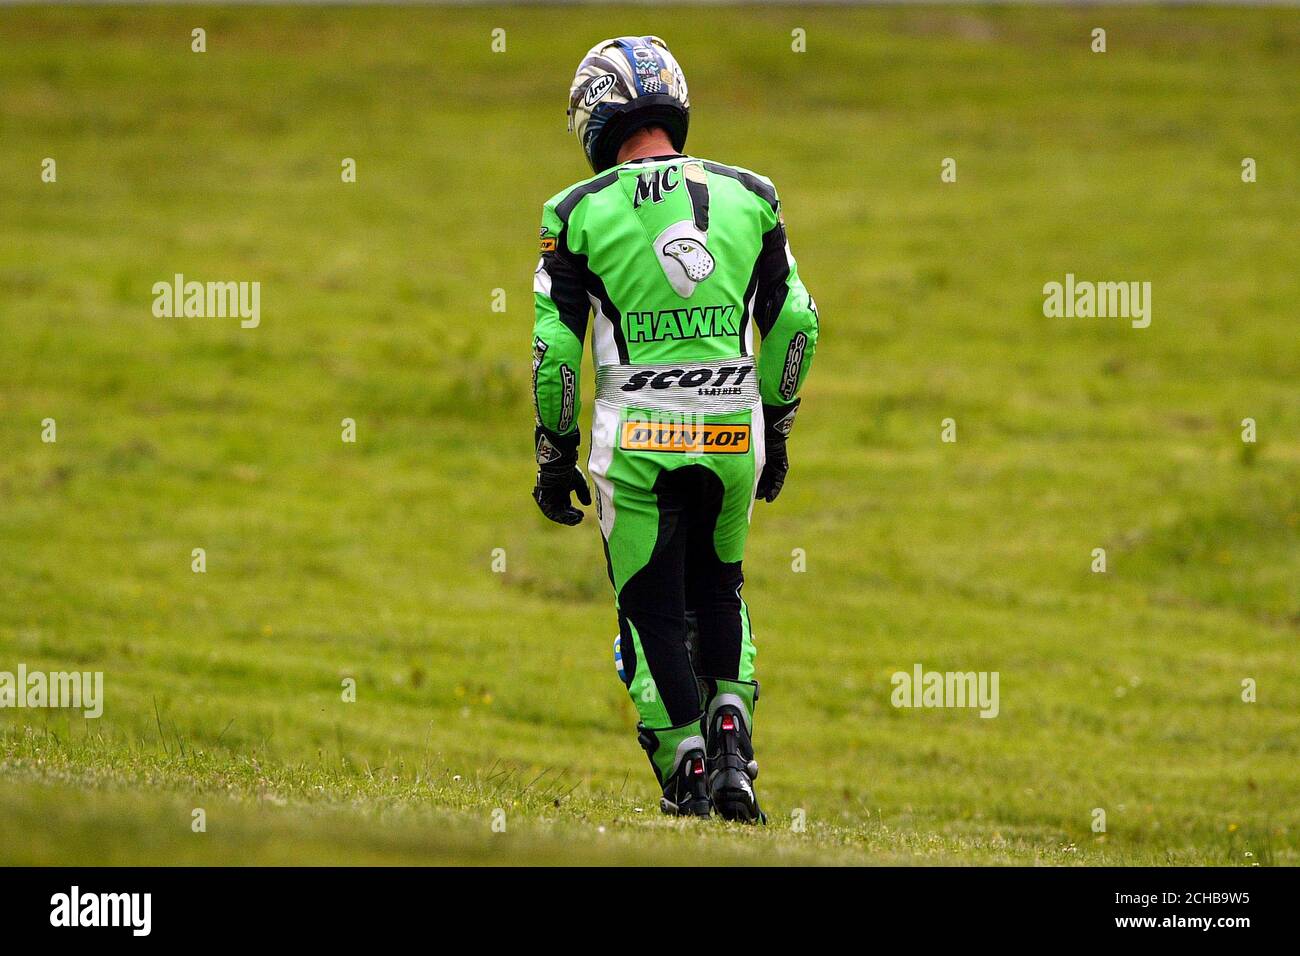 Kawasaki rider John McGuinness after crashing during the British Superbike Championship at Knockhill Race Circuit, Fife, Scotland. Stock Photo